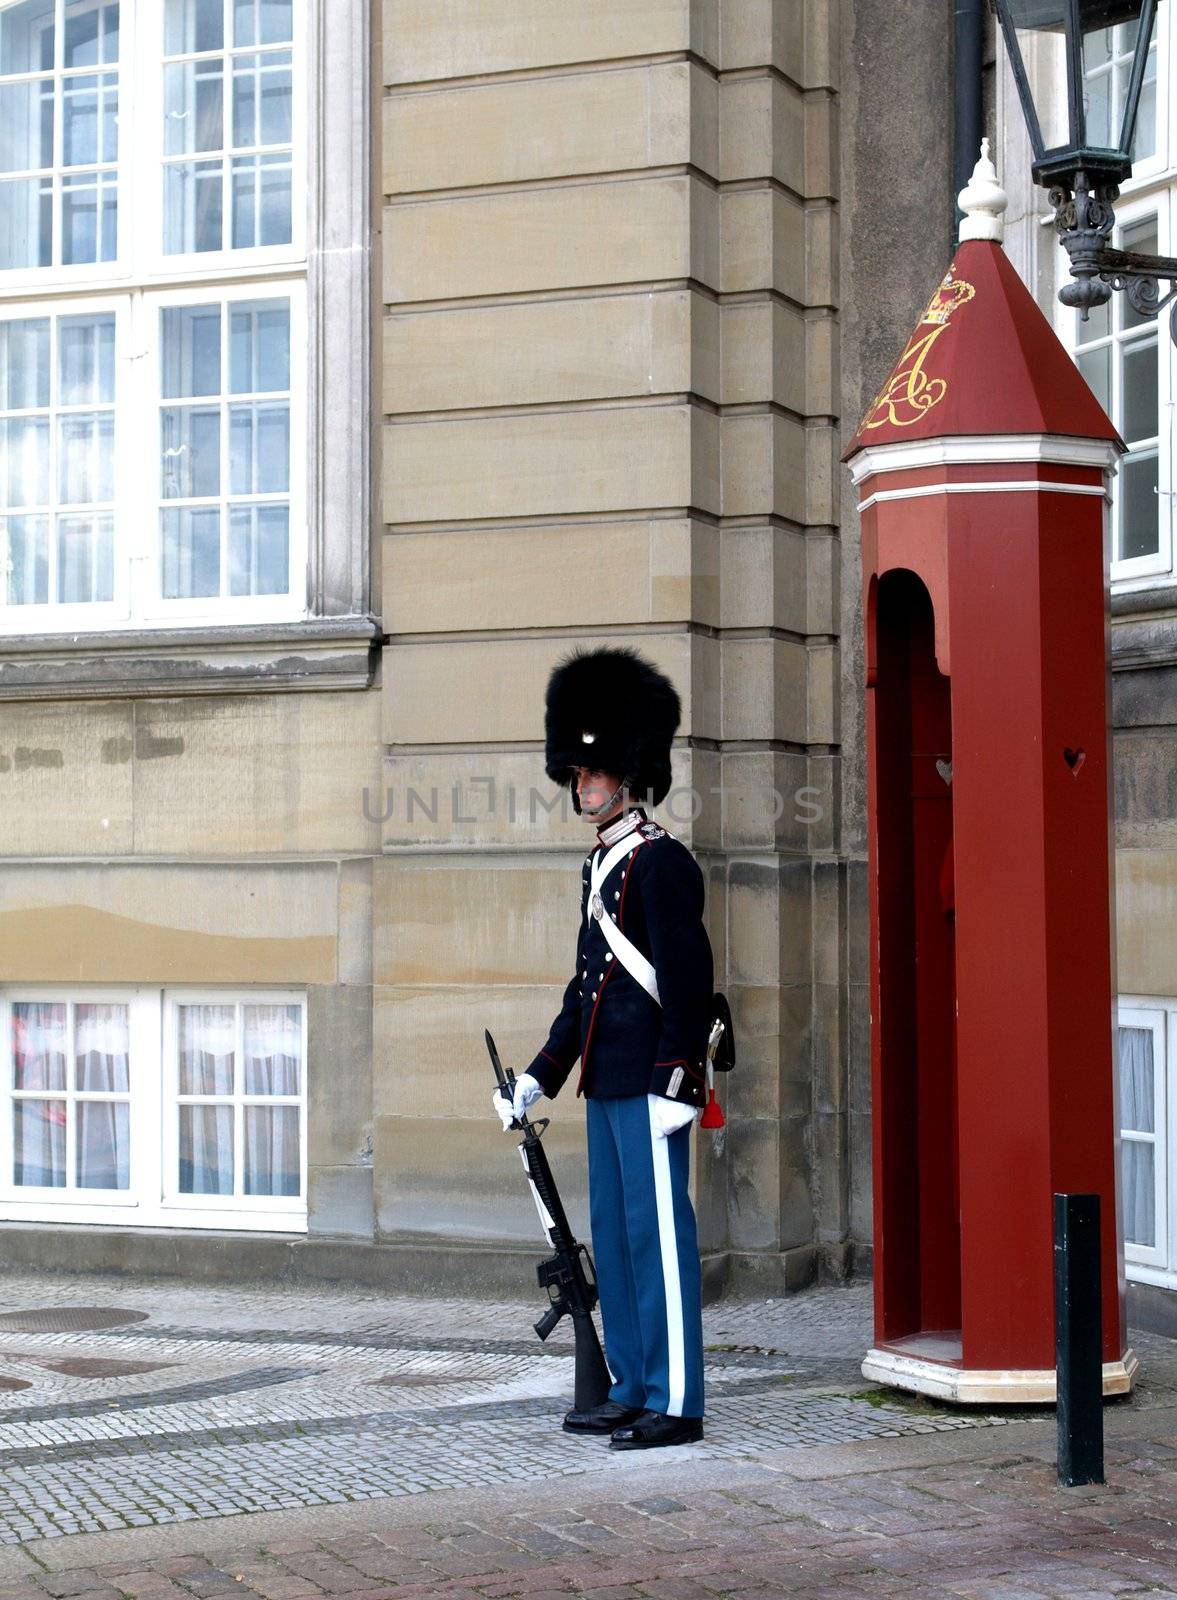 A Danish Royal guard at Amalienborg Palace in Copenhagen.